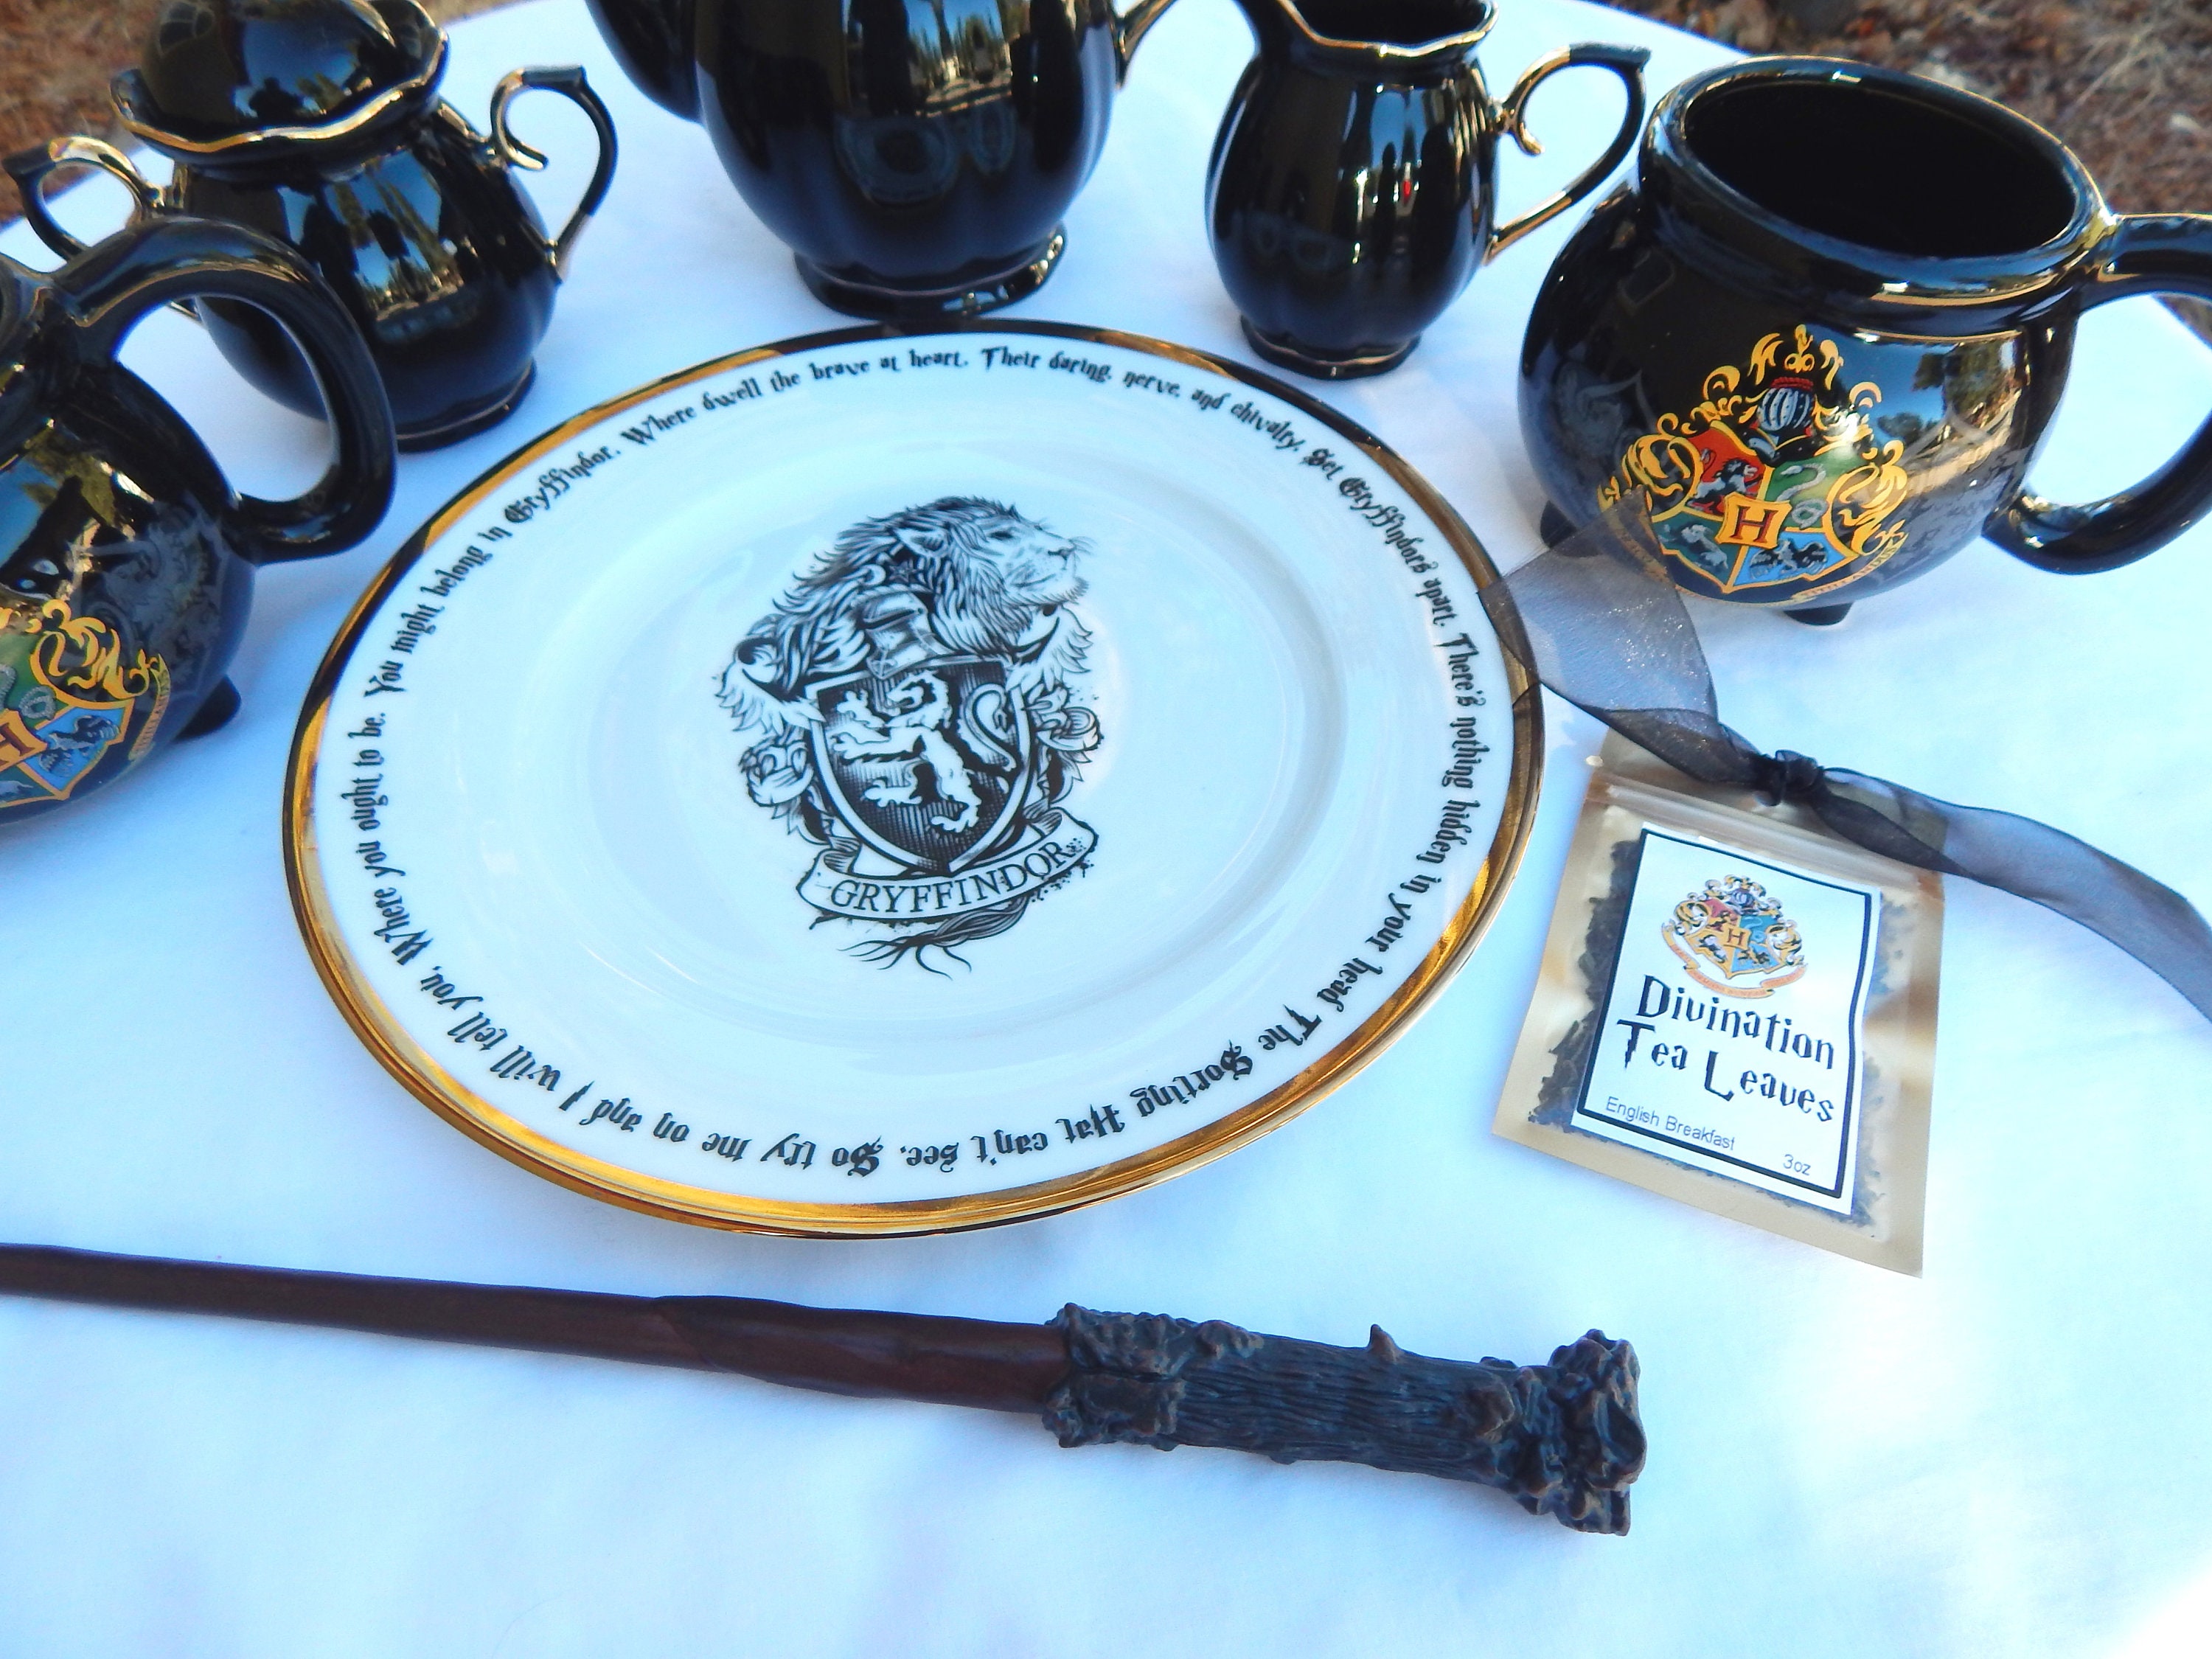 Buy Harry Potter Teapot Porcelain Teapot Kitchen Sorting Hat from